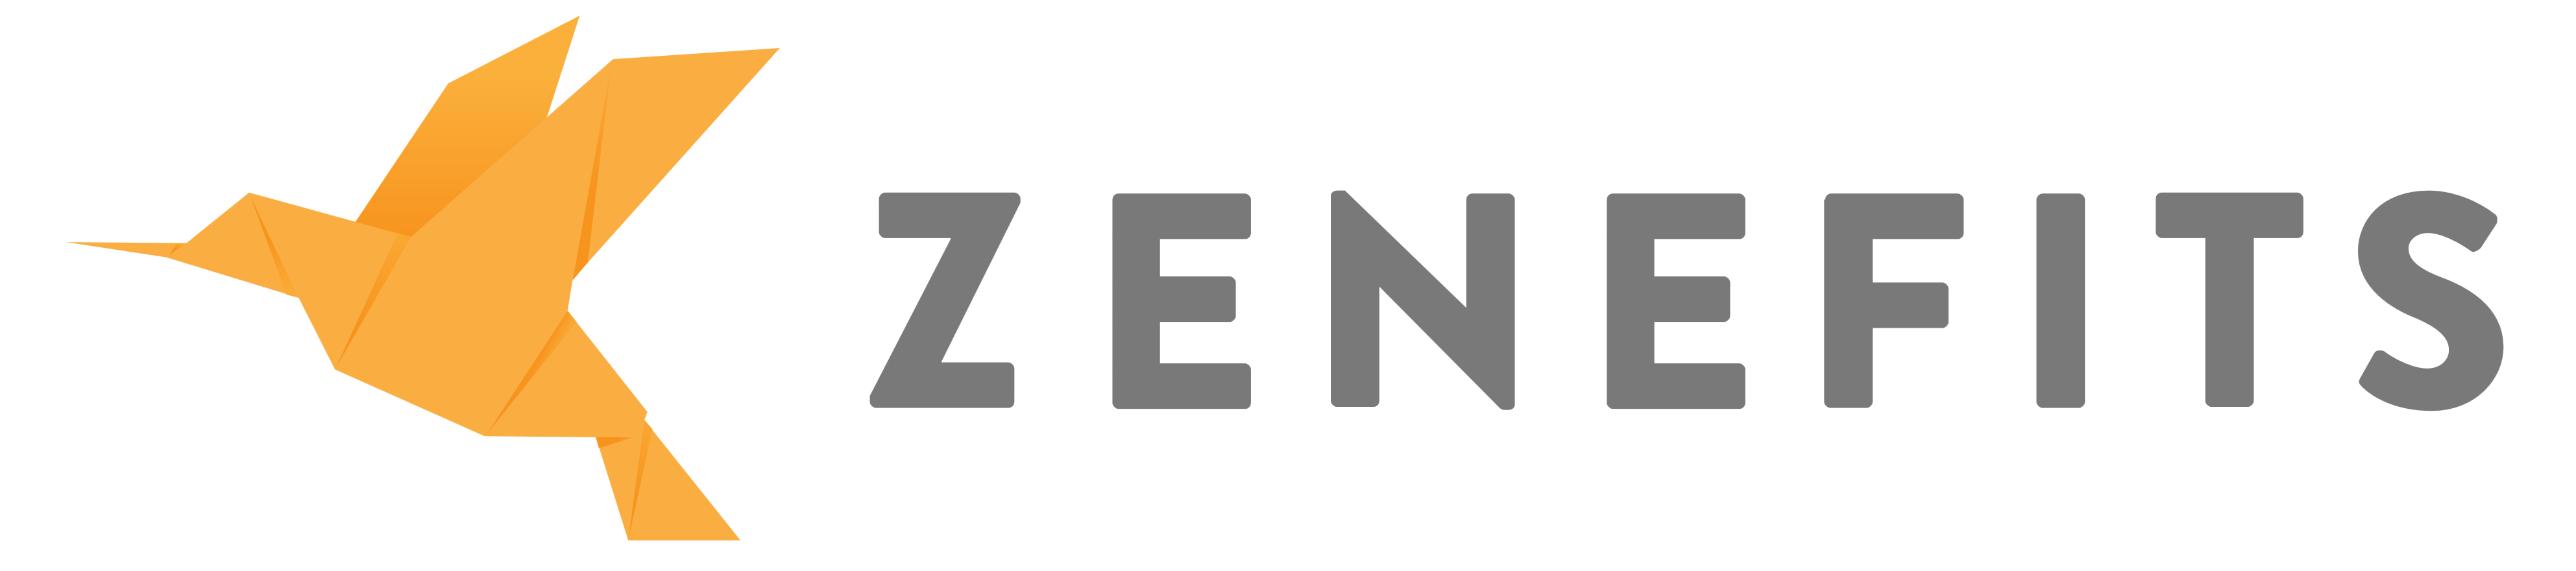 Zenefits Logo - Zenefits Moves to Shed Scandals, Transform Image | Digital - Ad Age